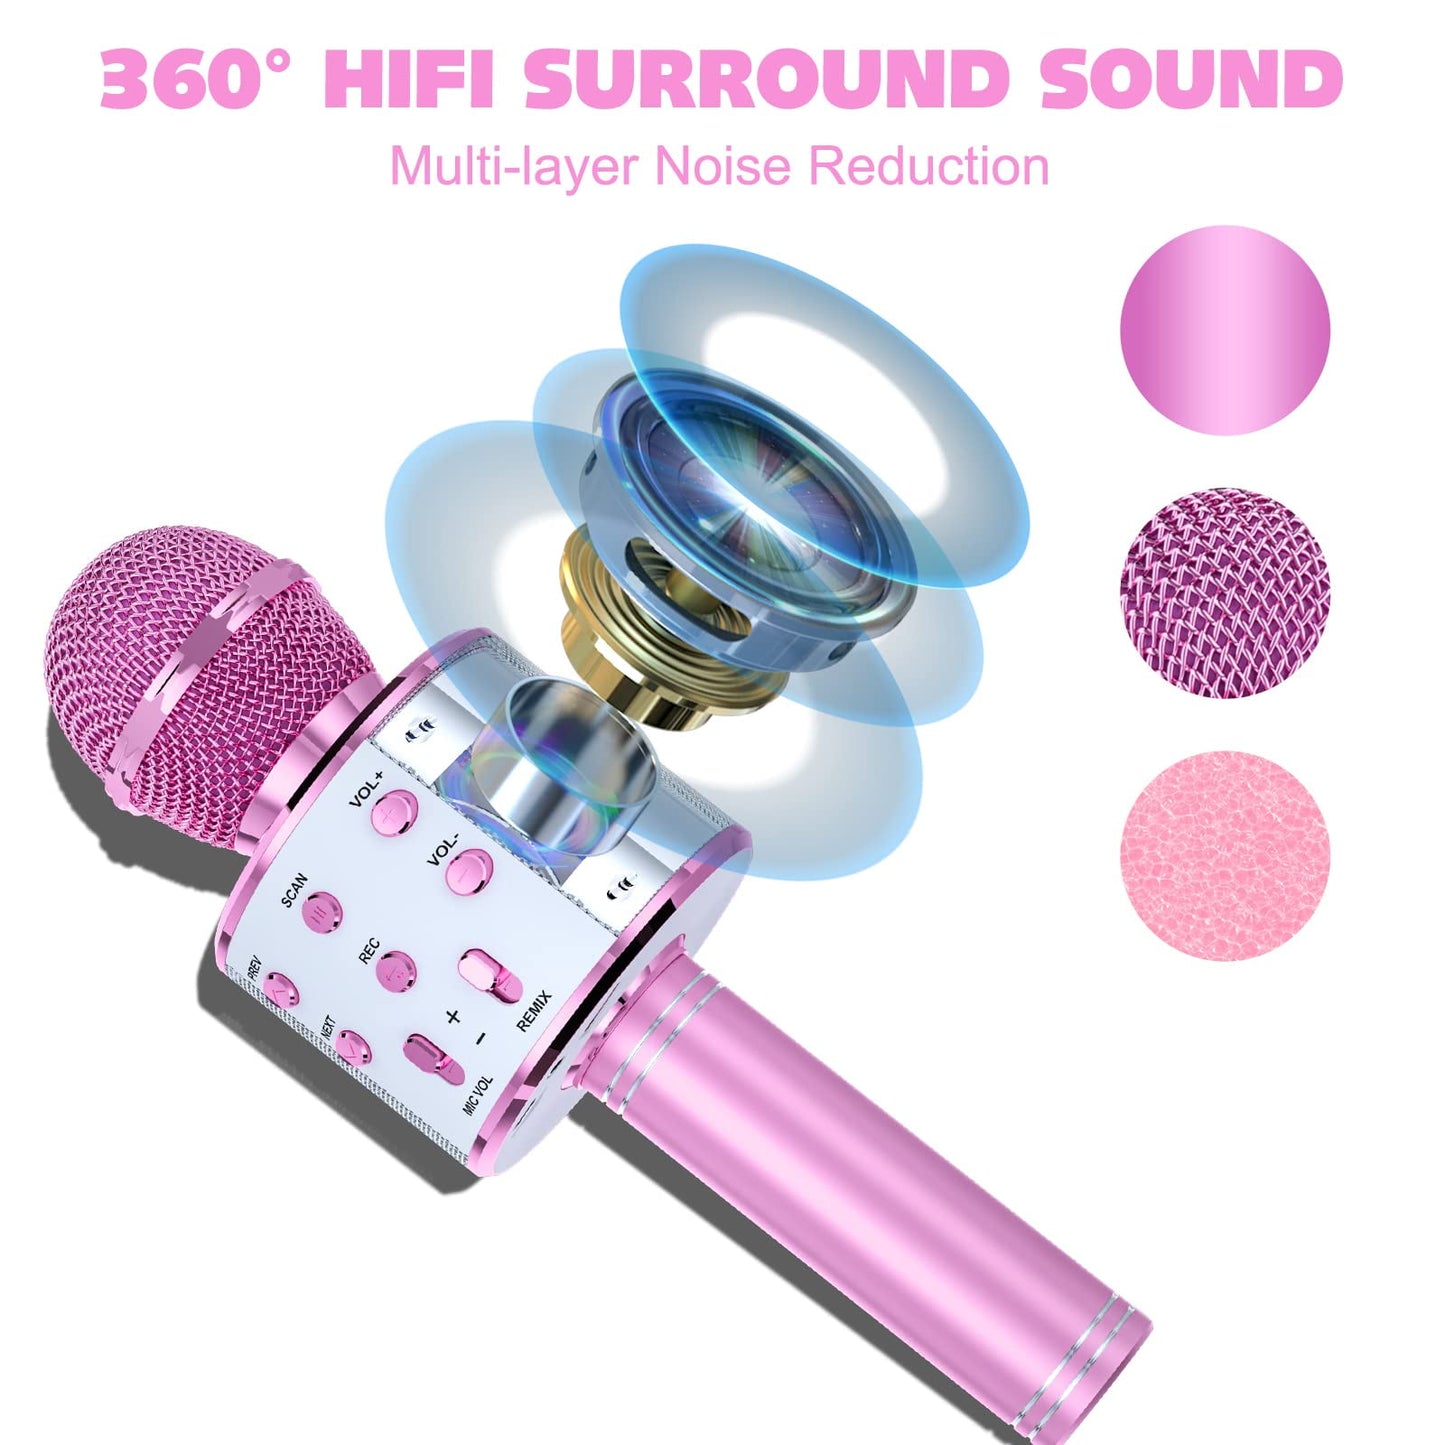 BONAOK 2 Pack Karaoke Microphone for Kids Adults, Wireless Bluetooth Karaoke Microphone for Singing, Portable Handheld Mic Speaker Machine,Birthday Gifts Toys for Girls Boys Teens(Blue & Purple)